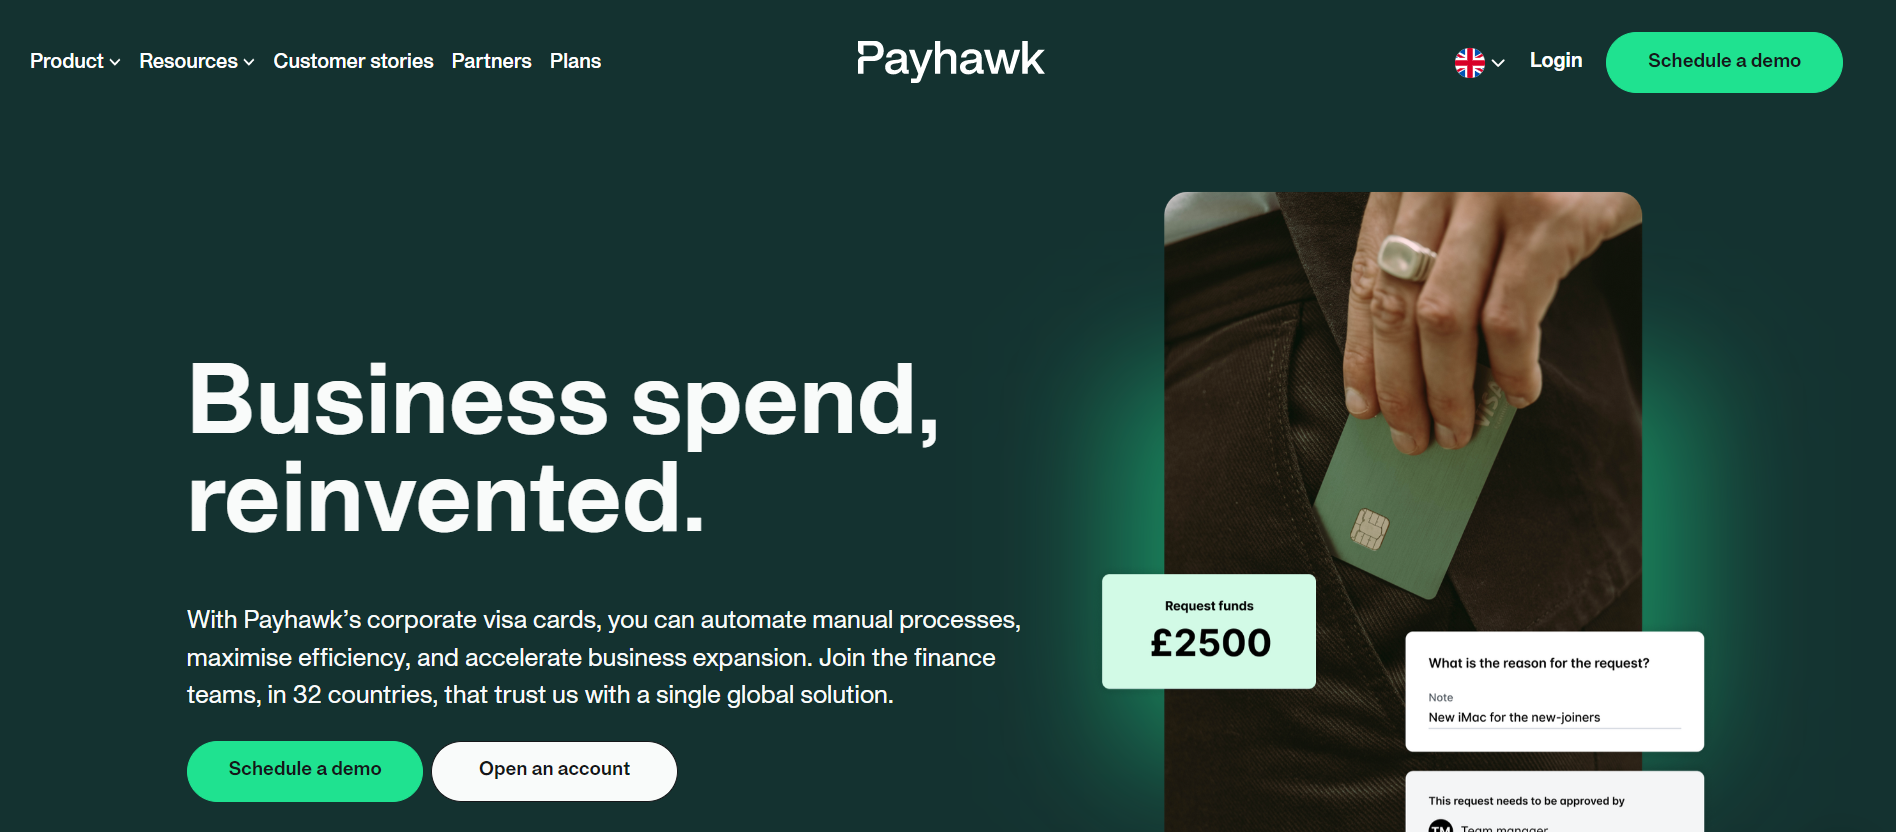 Payhawk